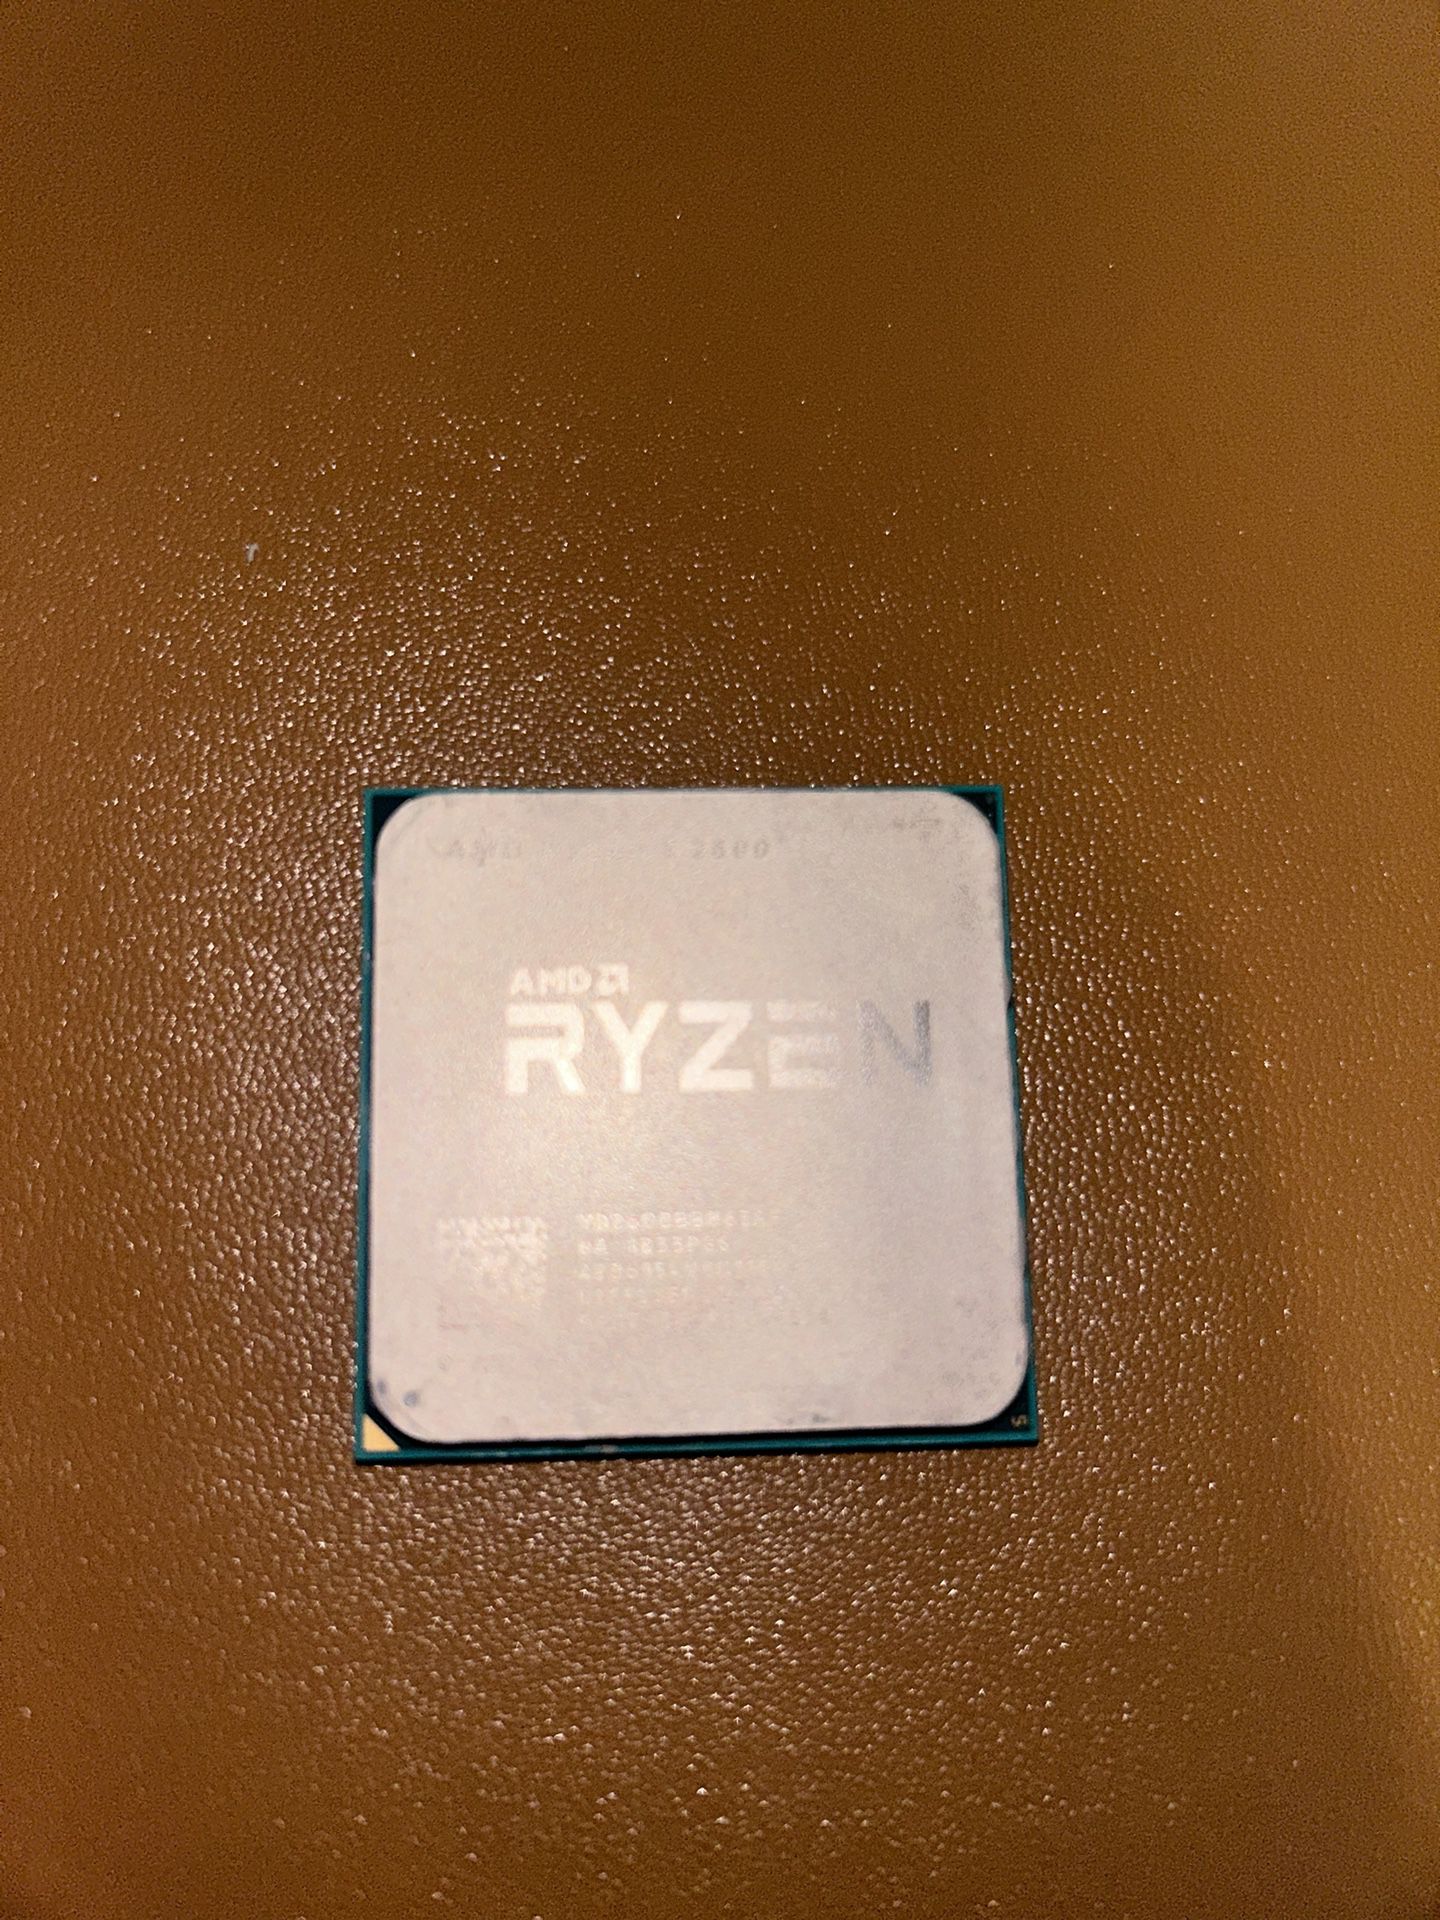 Ryzen 5 2600 Processor 